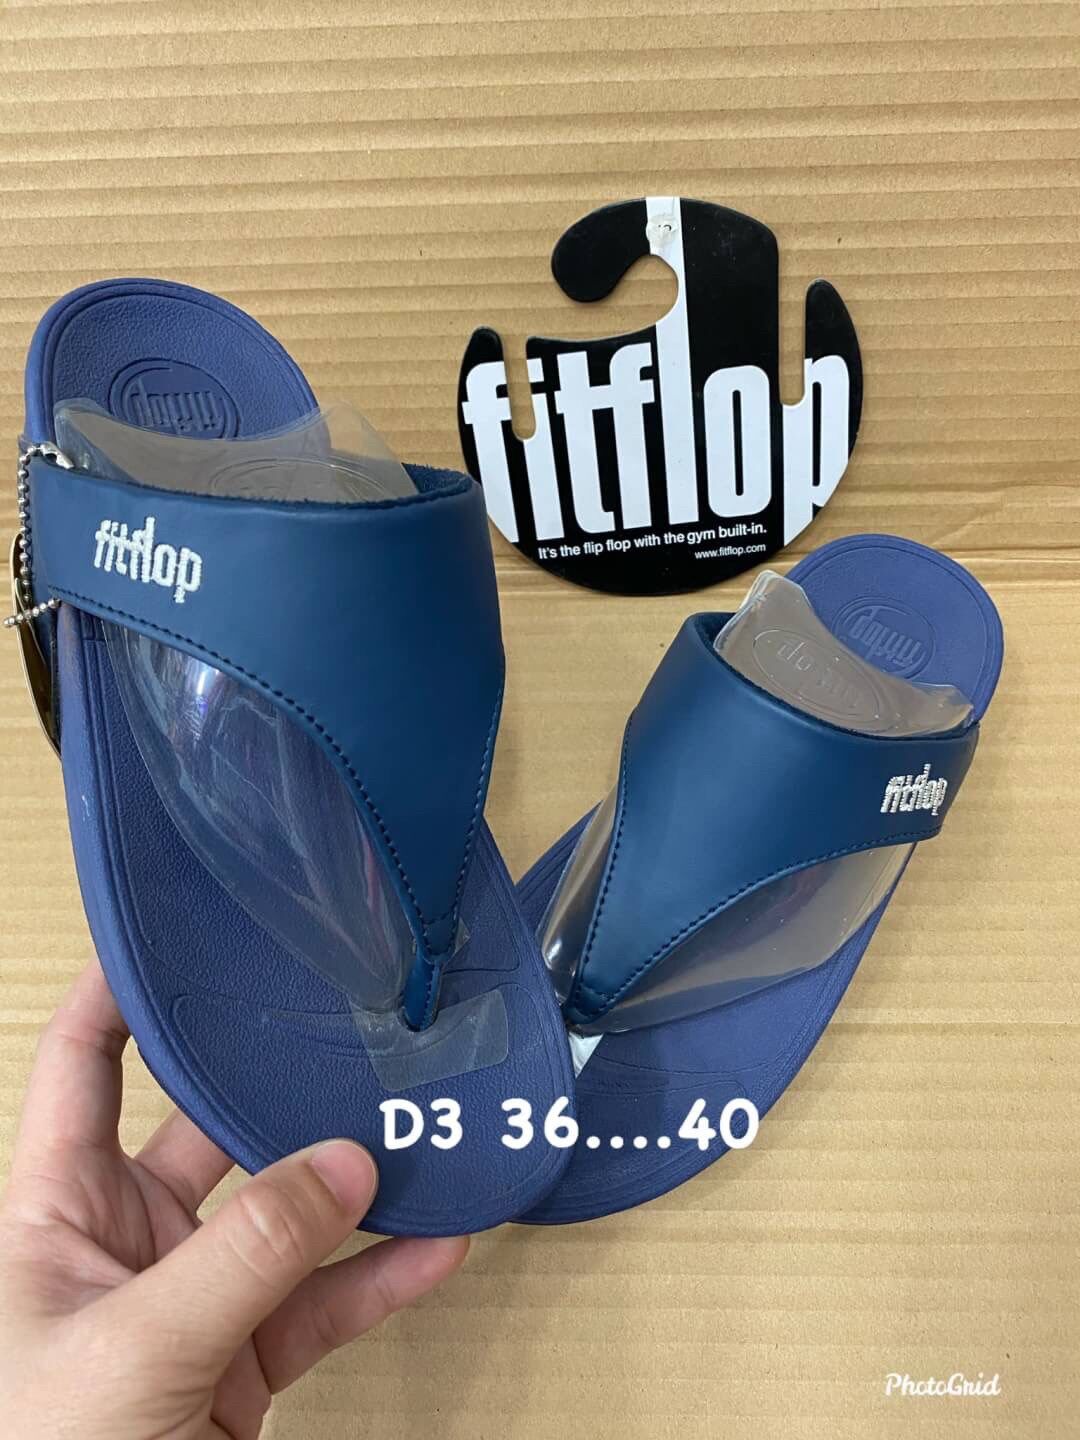 New top.1fitflop style รองเท้าแตะเพื่อสุขภาพใส่นุ่มสบายเท้า คุ้มค่าเกินราคา!! (Mungme_shop)